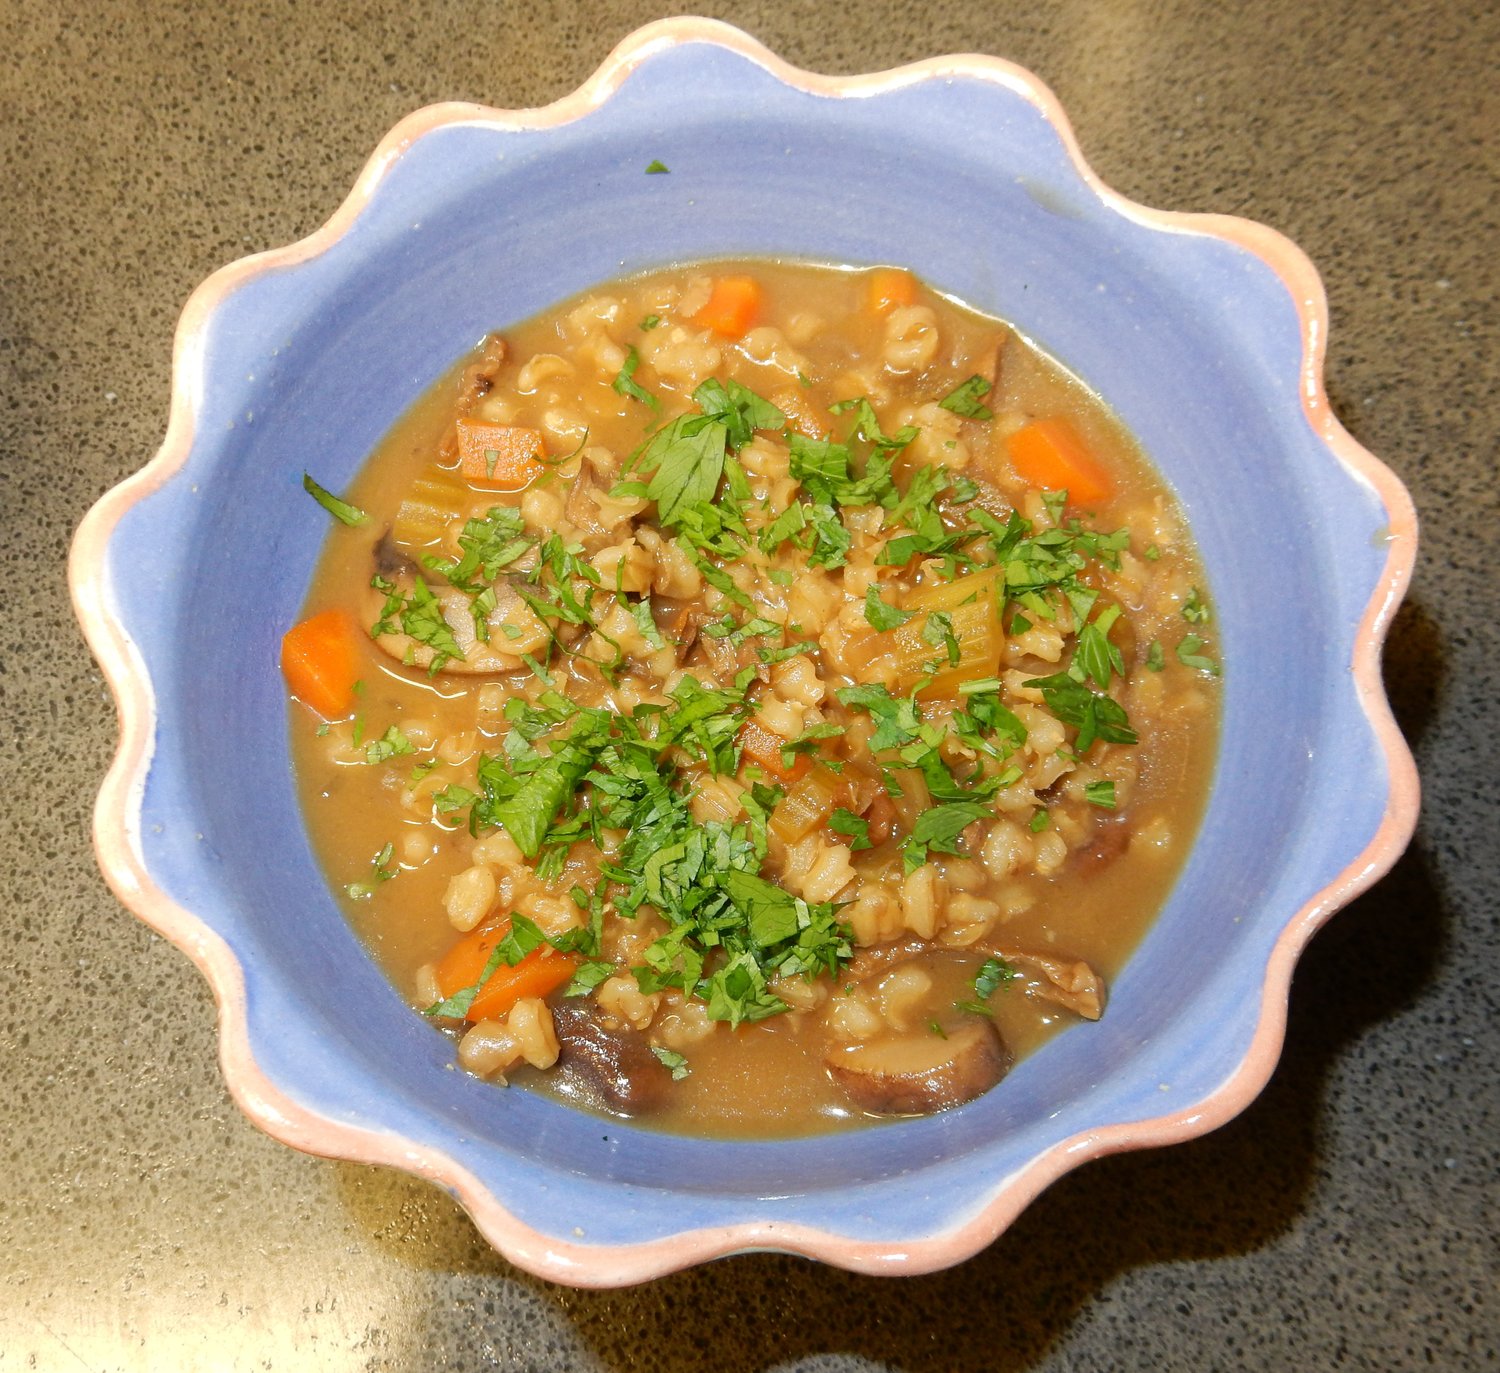 Bowl of mushroom barley soup.